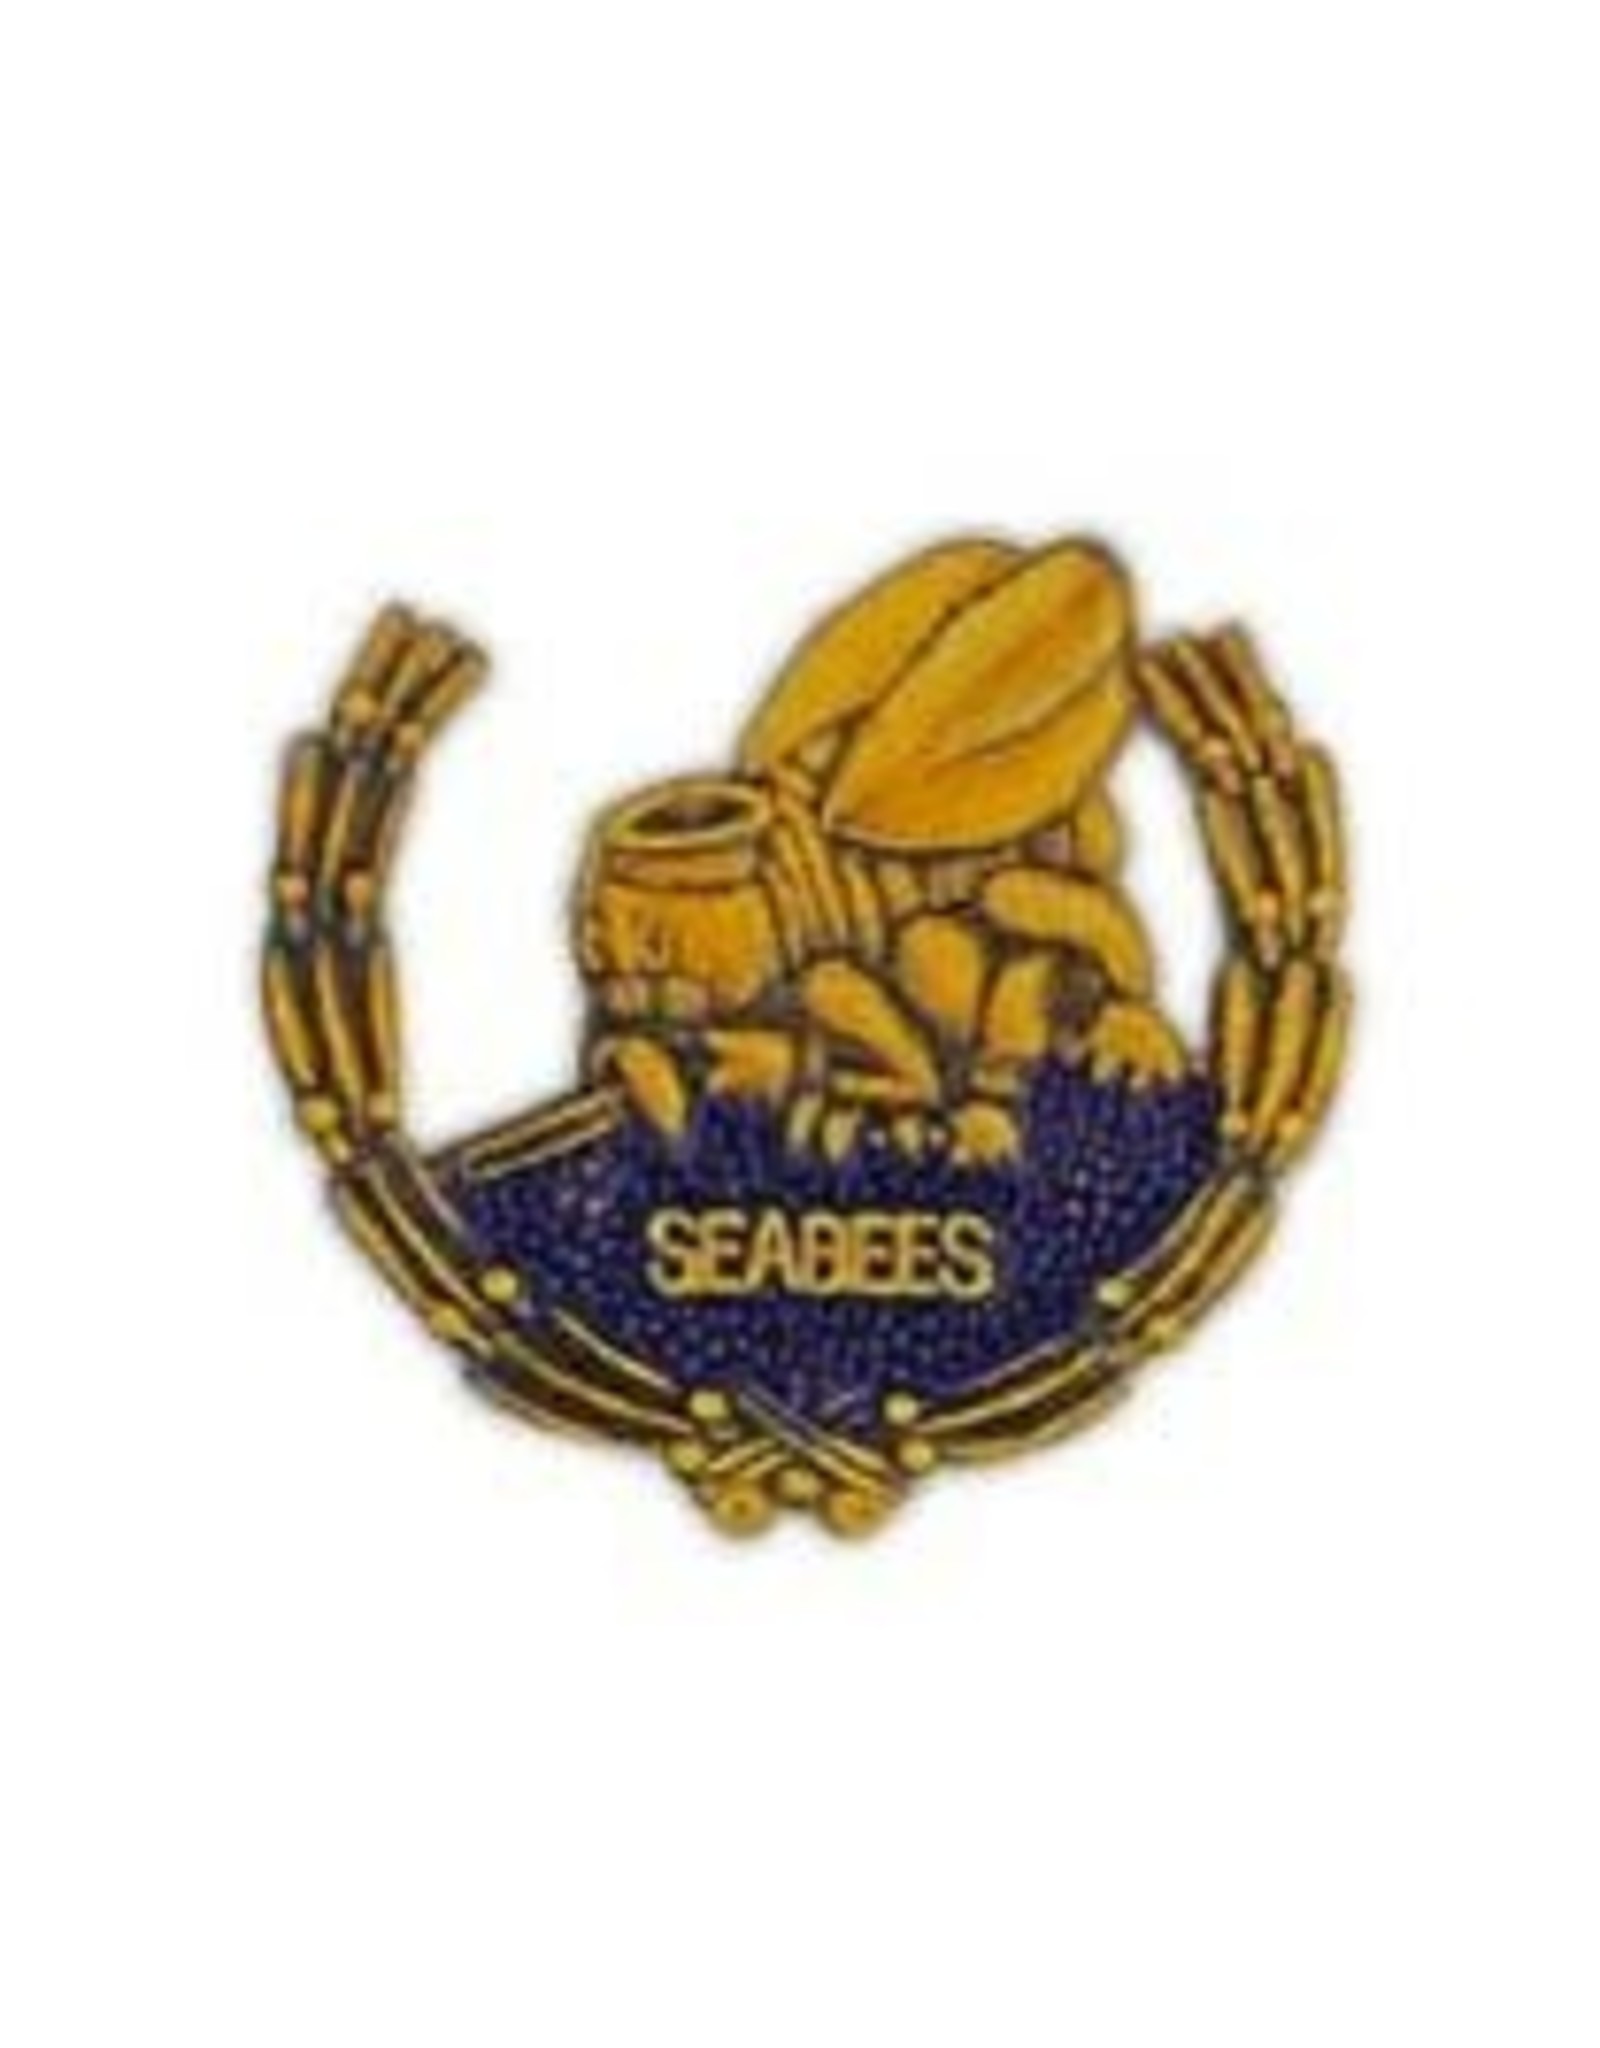 Pin - USN Seabees Wreath